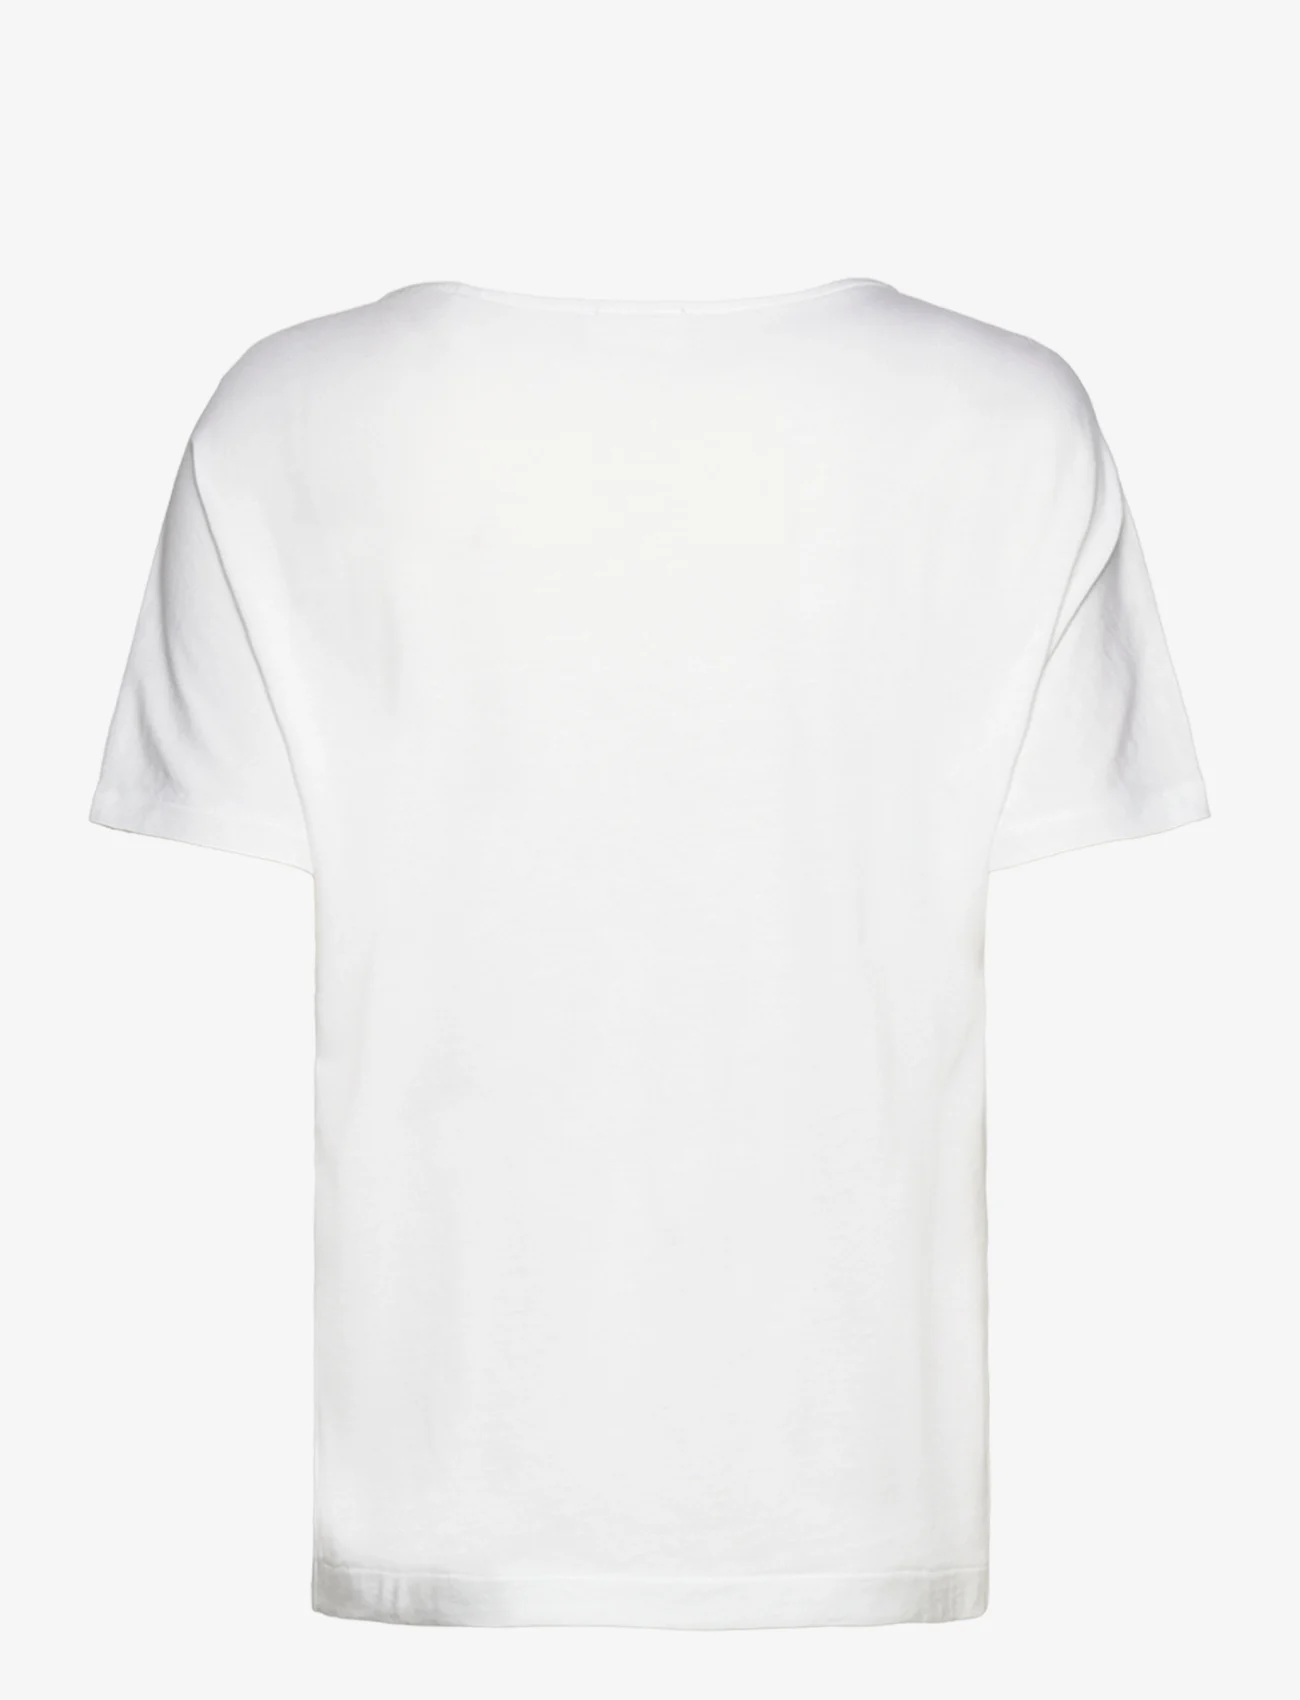 Esprit Casual - T-Shirts - t-shirts - white - 1